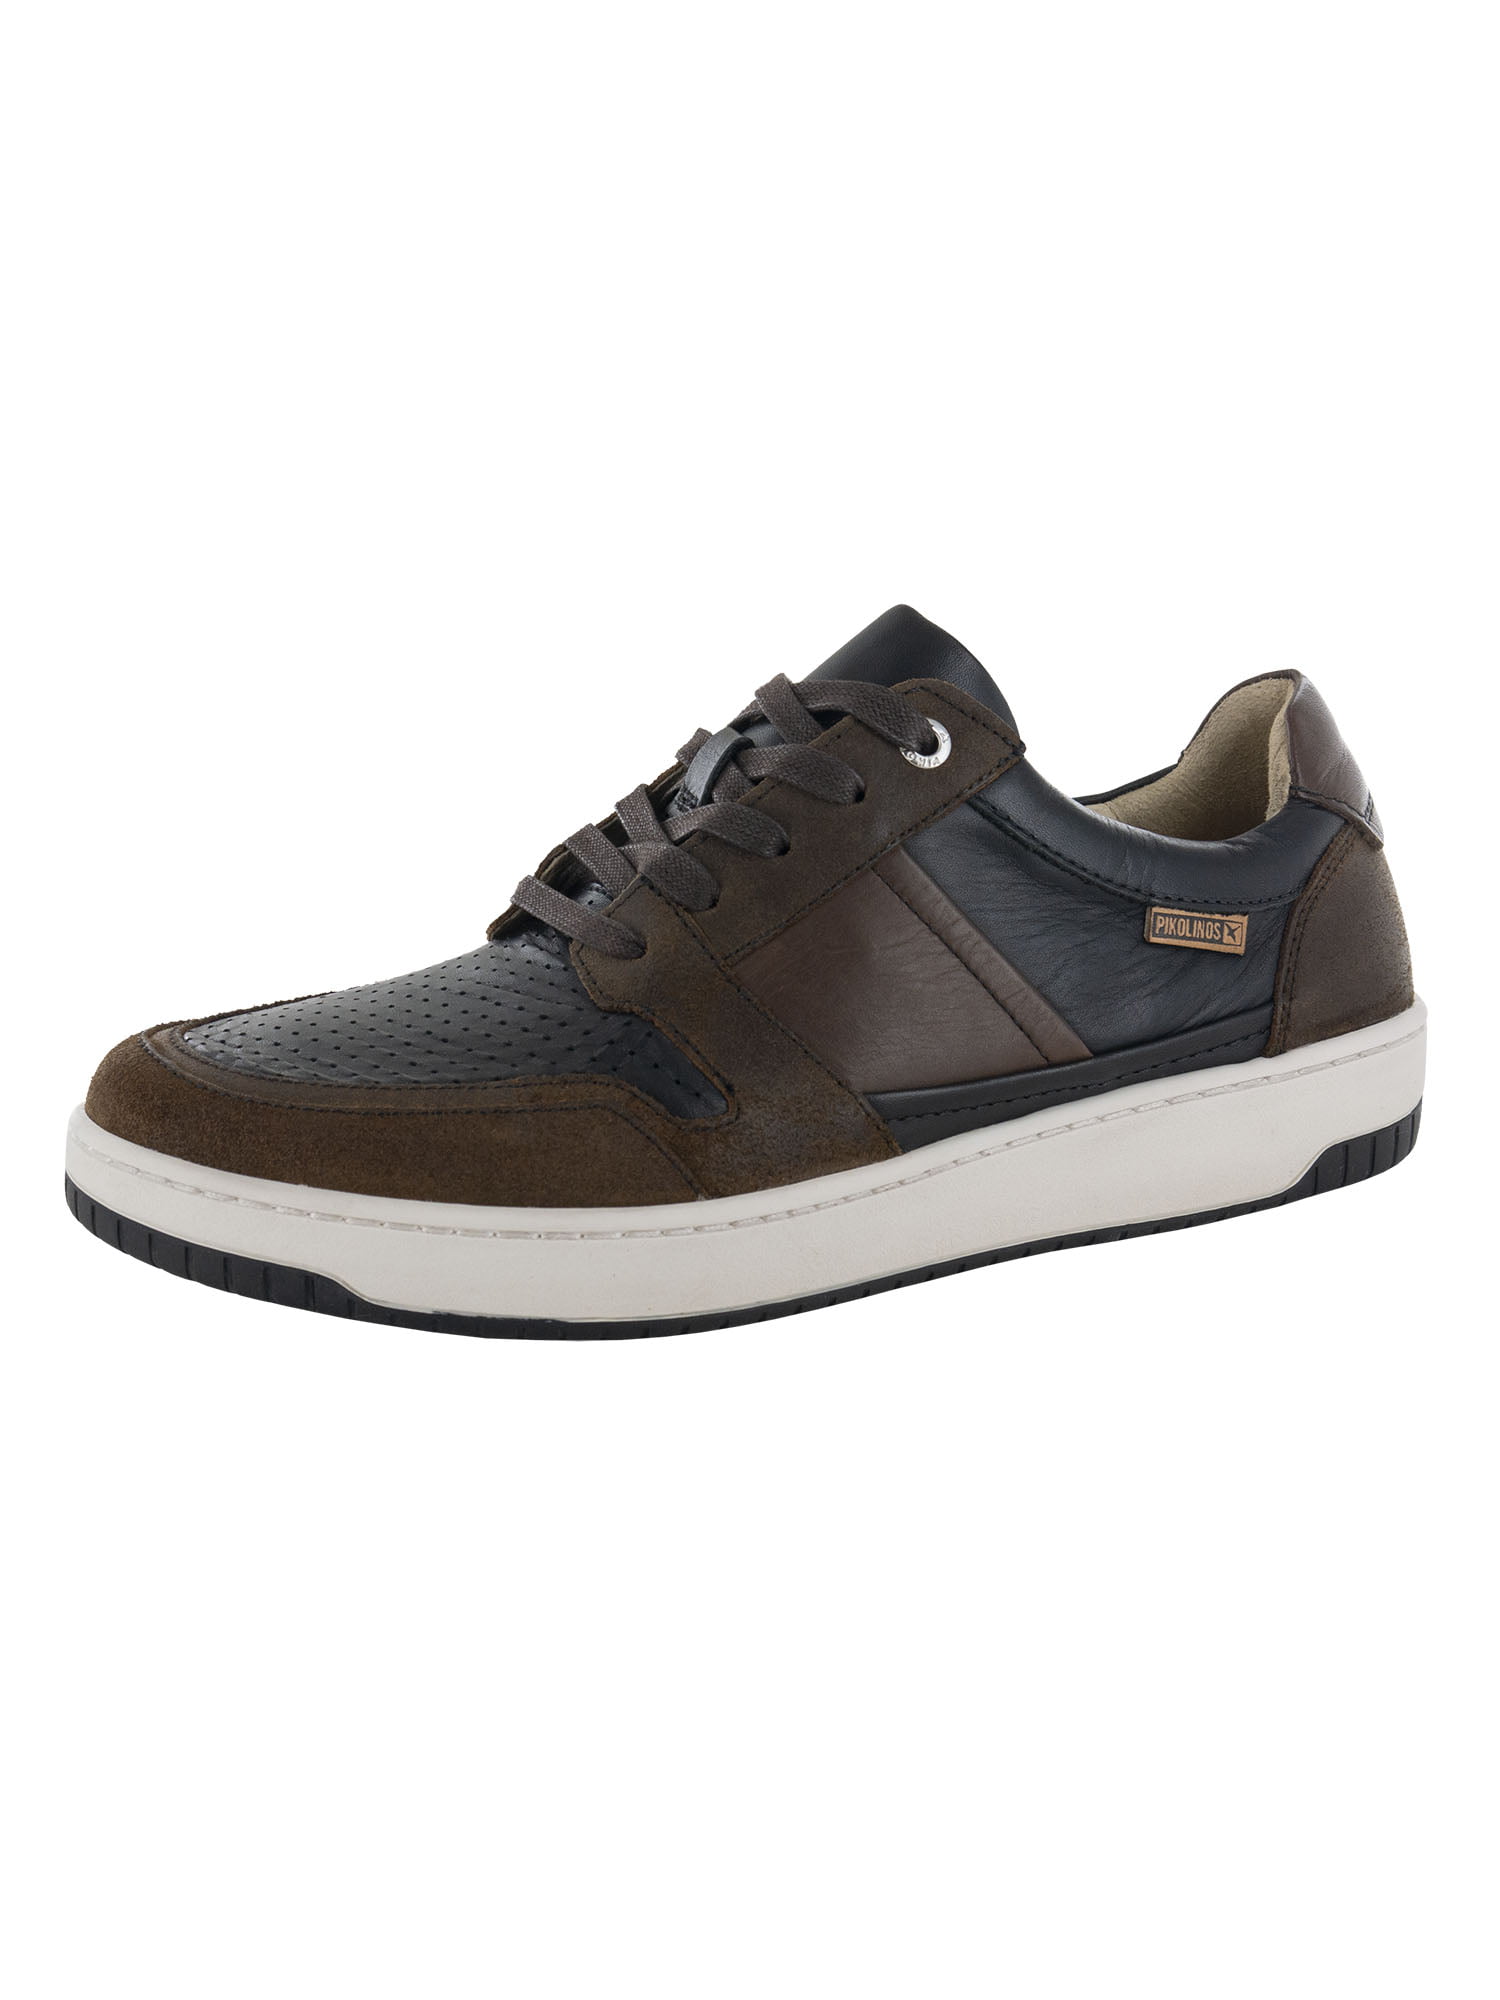 Pikolinos - Pikolinos Mens Corinto M1M-6228 Sneaker Shoe - Walmart.com ...